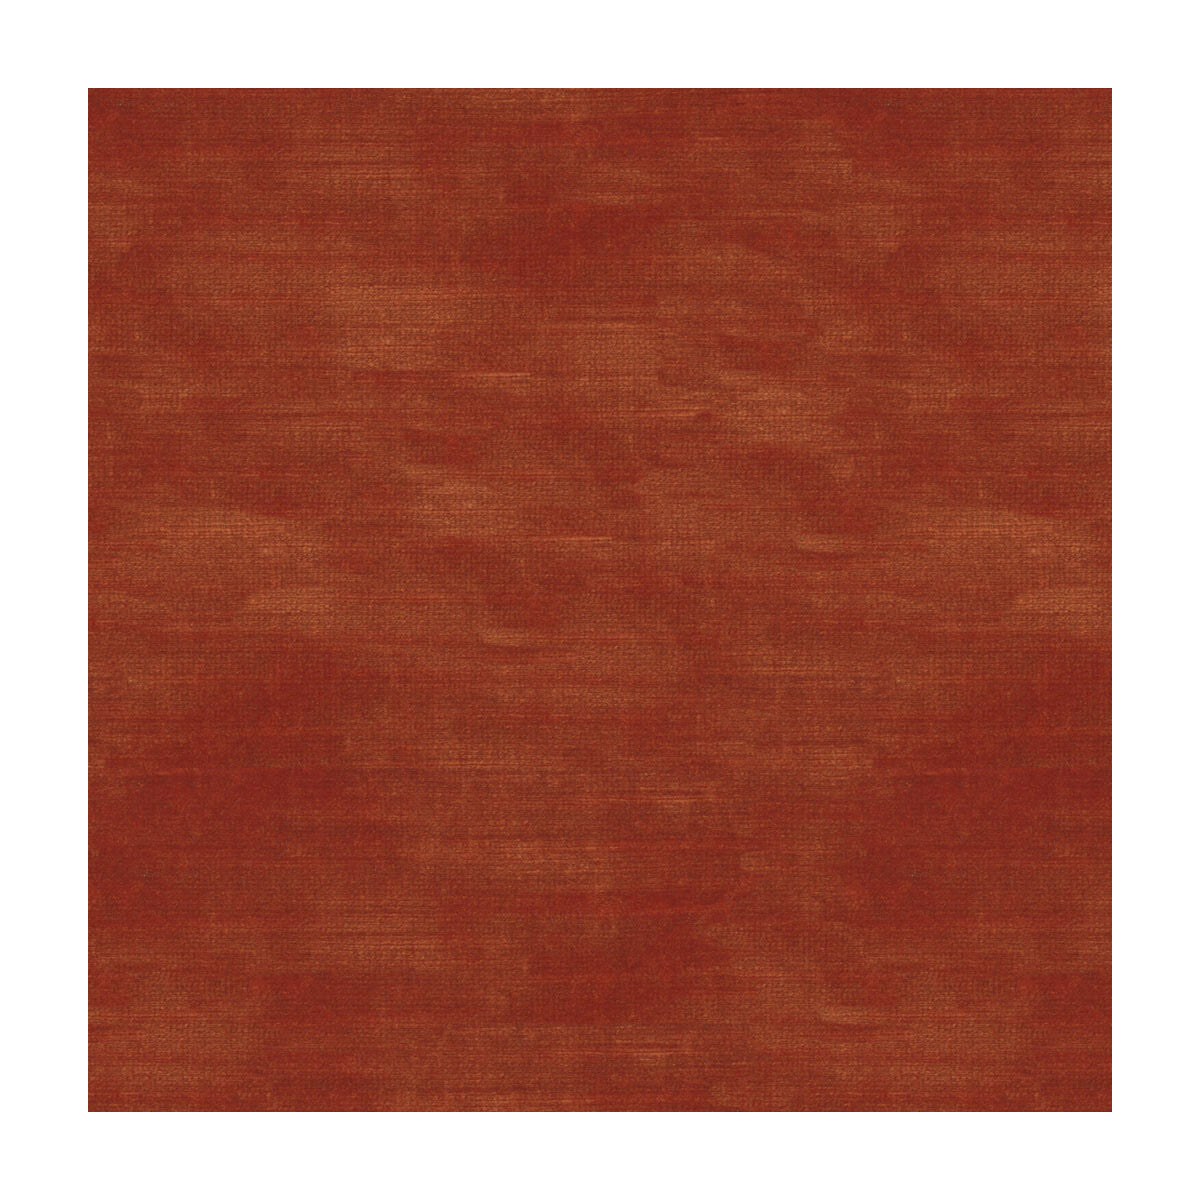 Lazare Velvet fabric in paprika color - pattern 8016103.12.0 - by Brunschwig &amp; Fils